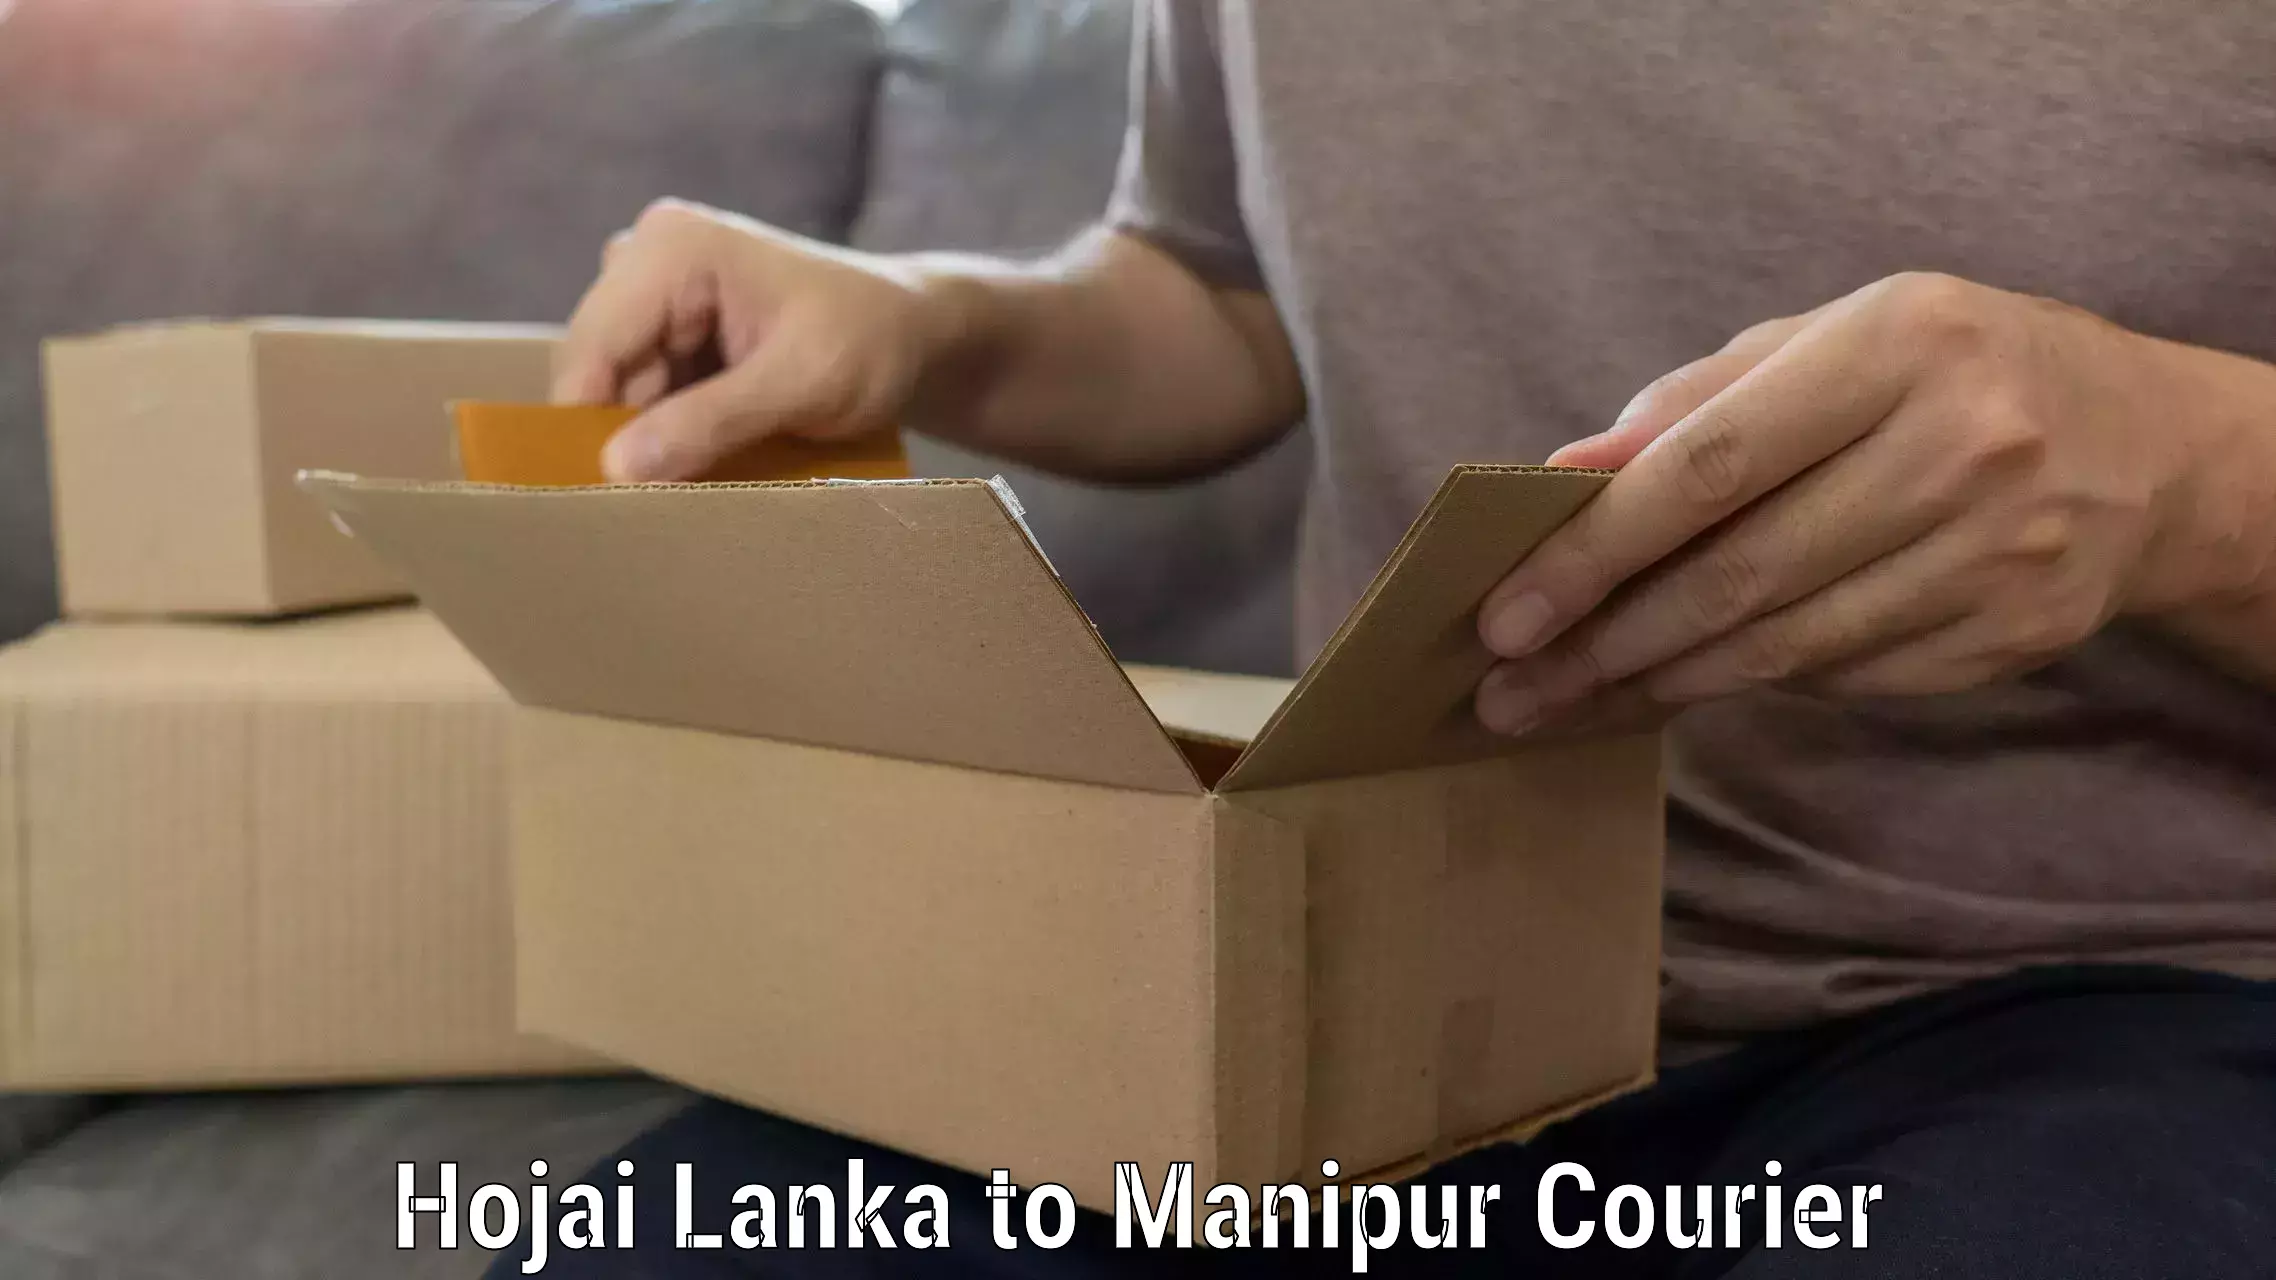 Quality moving company Hojai Lanka to Manipur